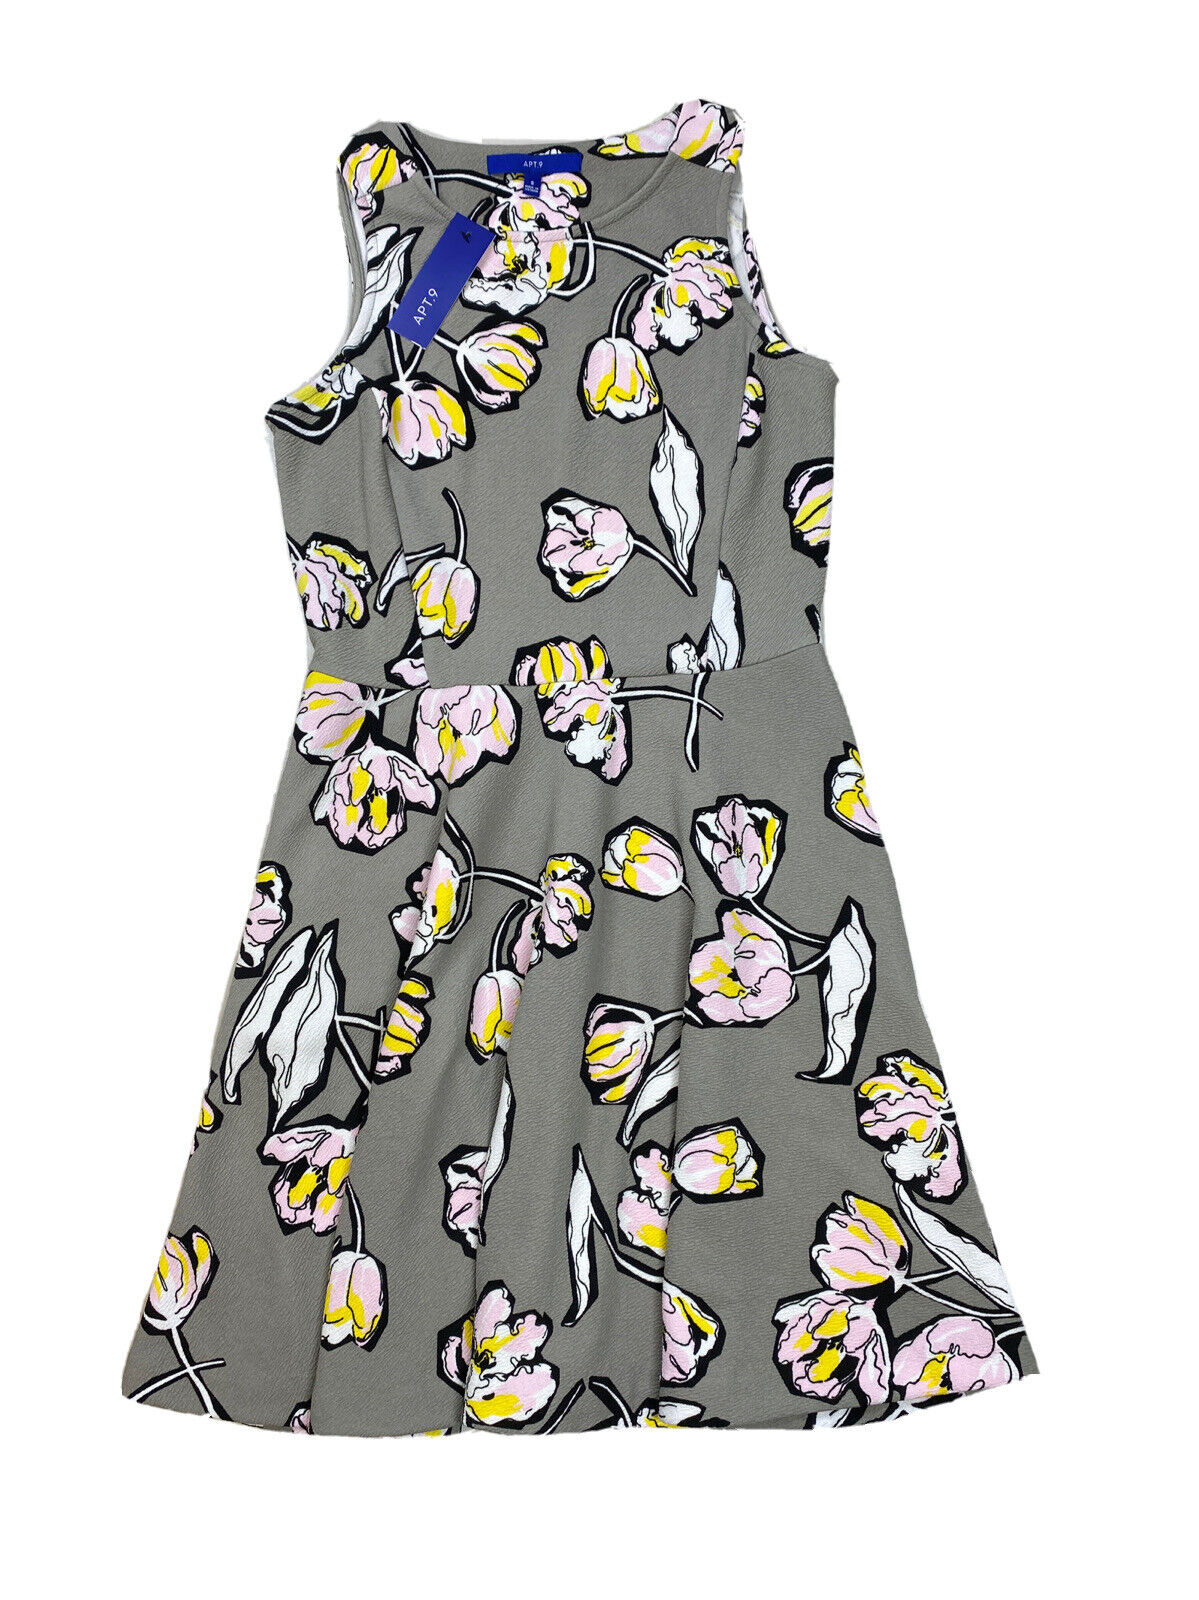 NEW Apt 9 Women's Gray Floral Stretch Sleeveless A-Line Dress - S